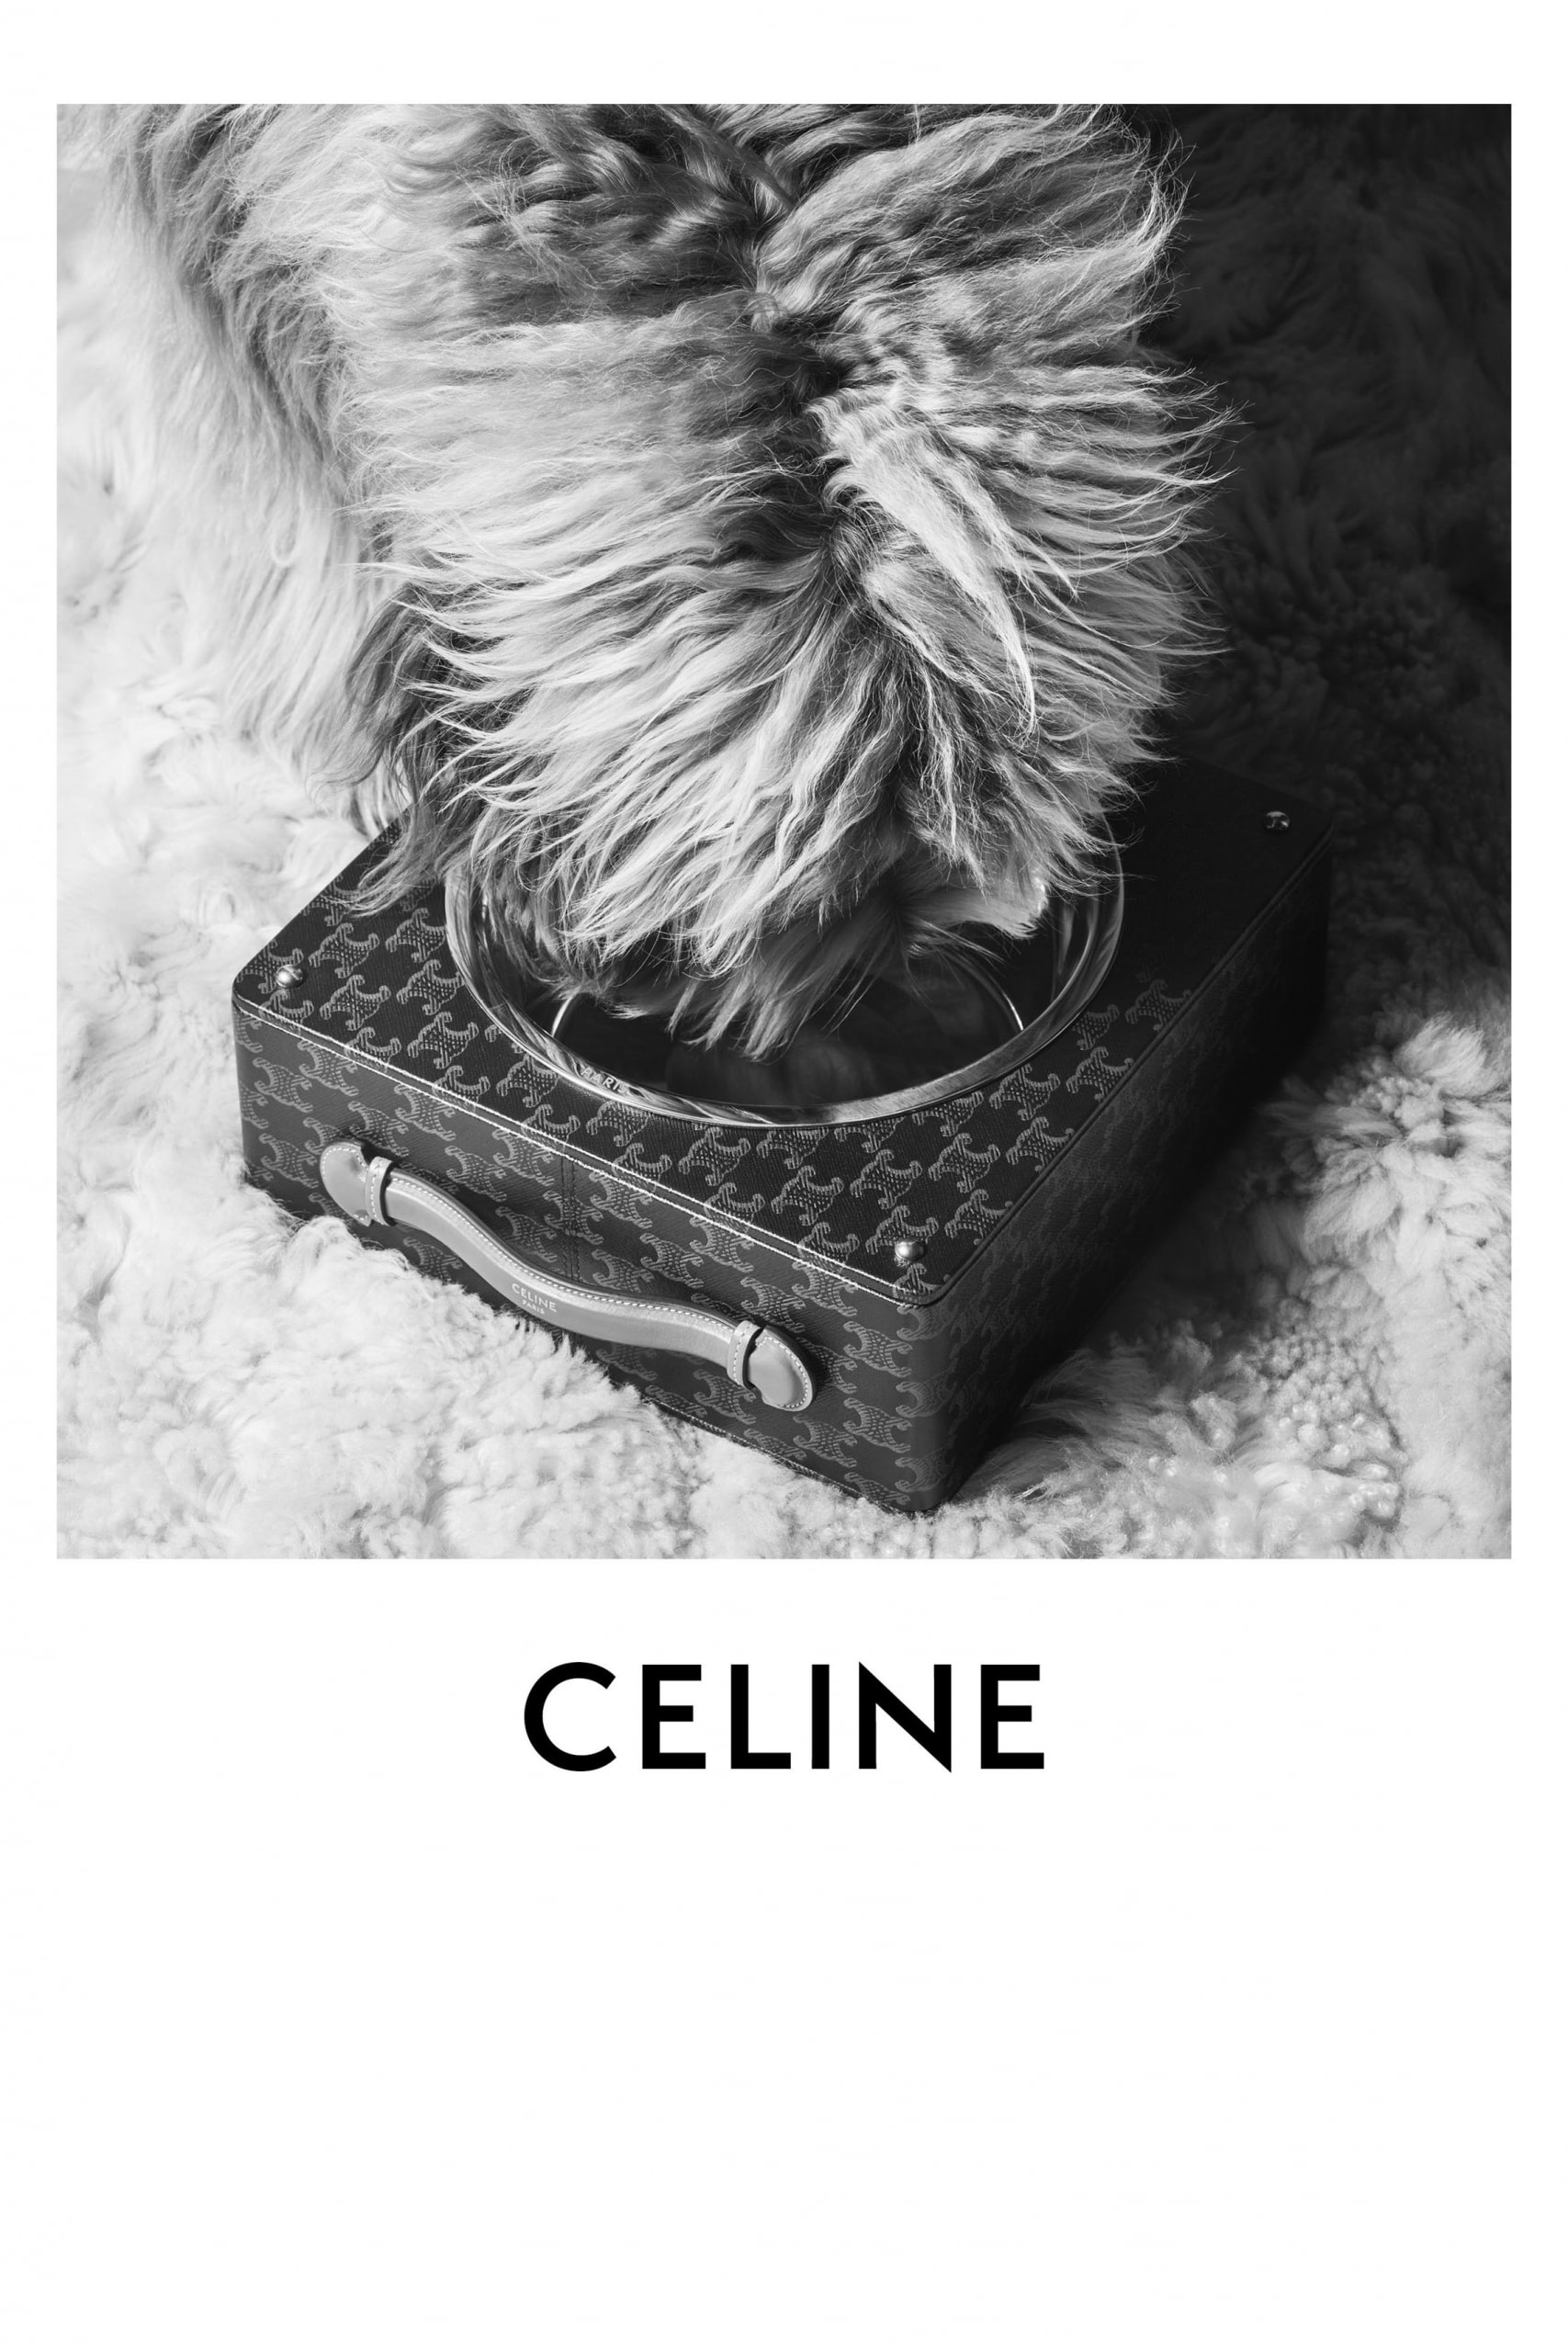 CELINE 发布全新 MAISON DOG 宠物系列